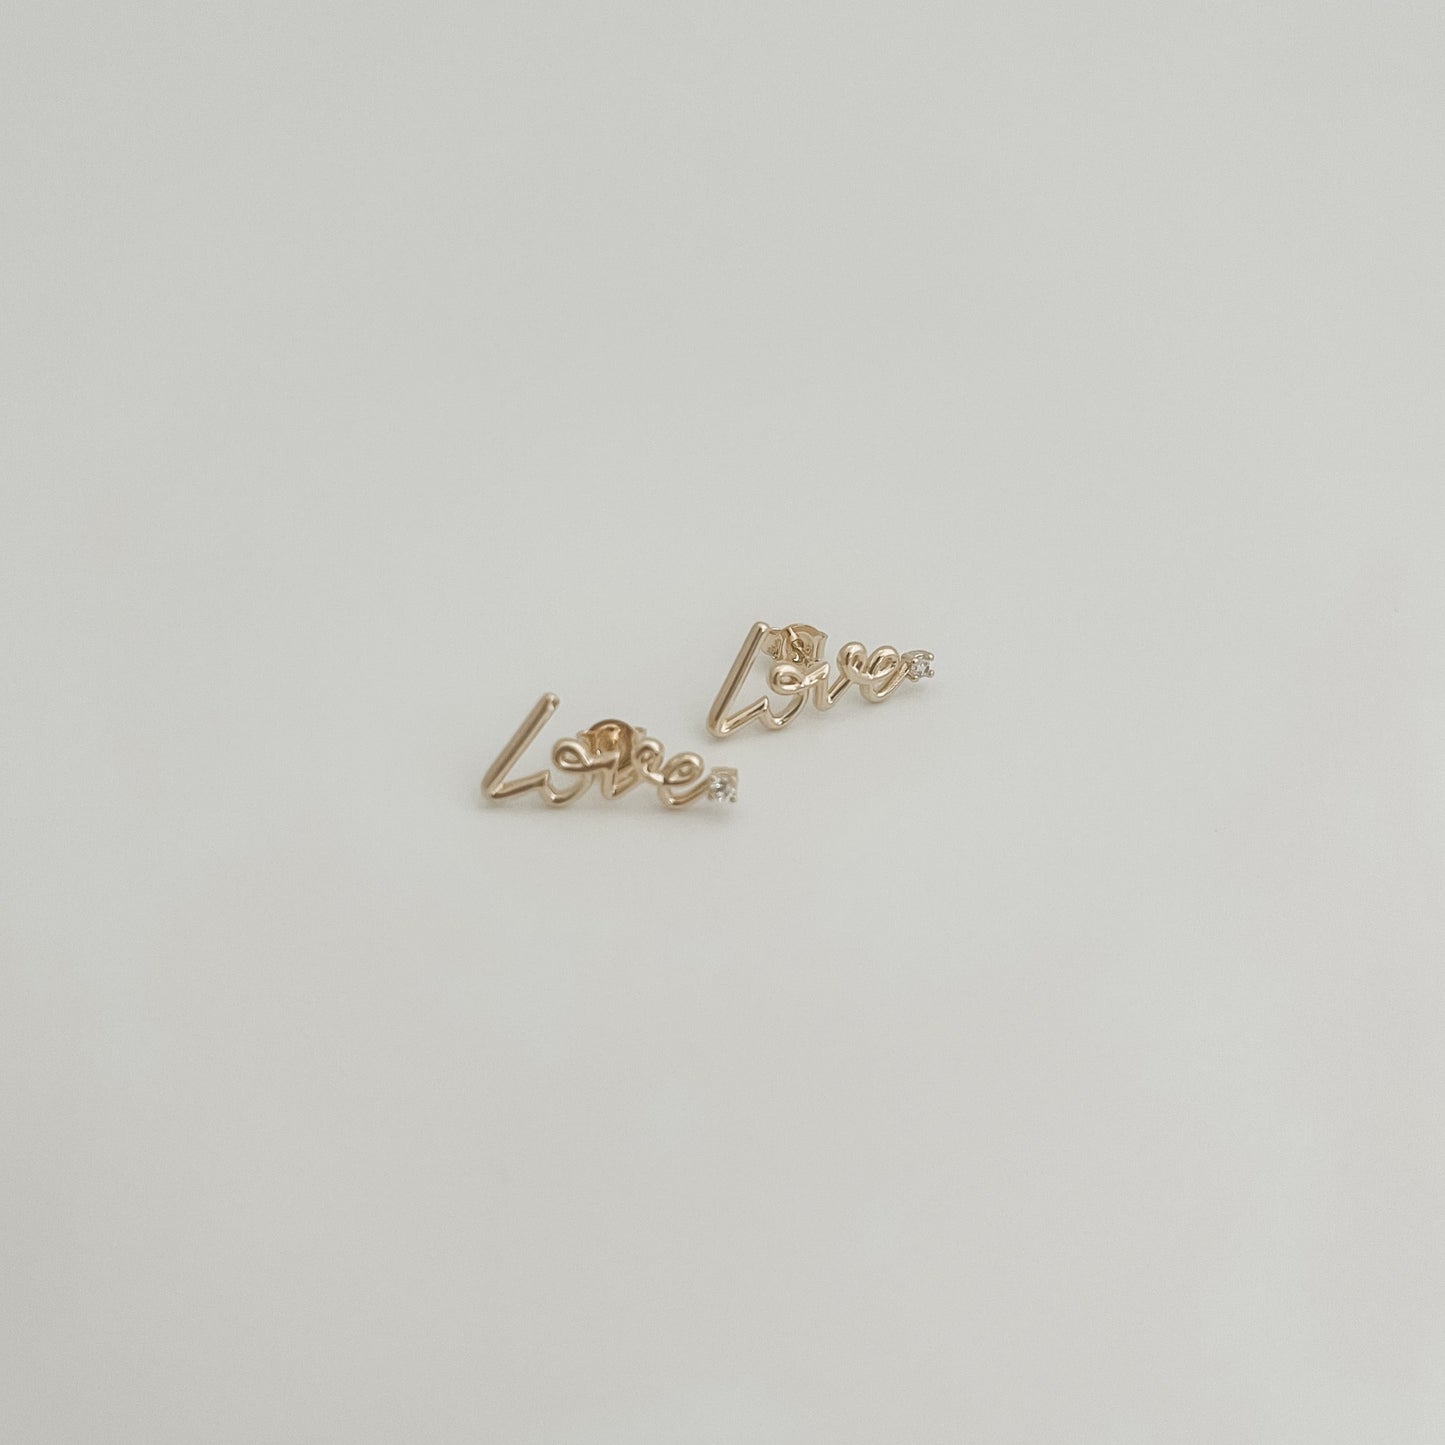 Cursive Love earrings